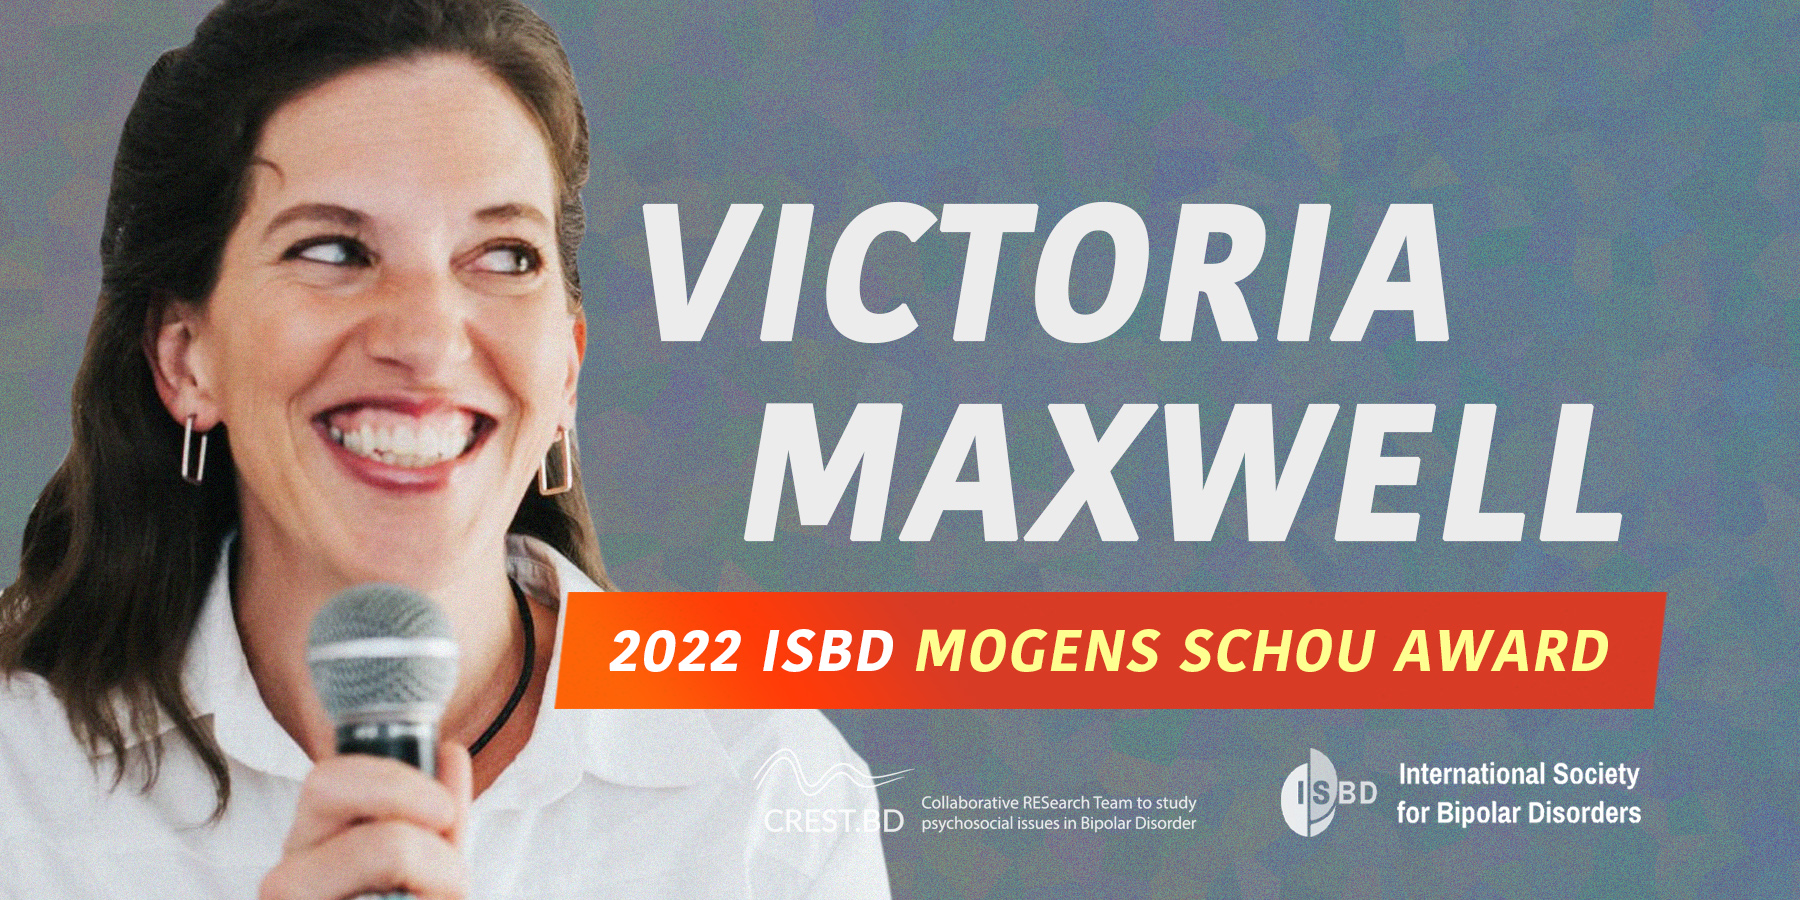 Victoria Maxwell awarded 2022 ISBD Mogens Schou Award